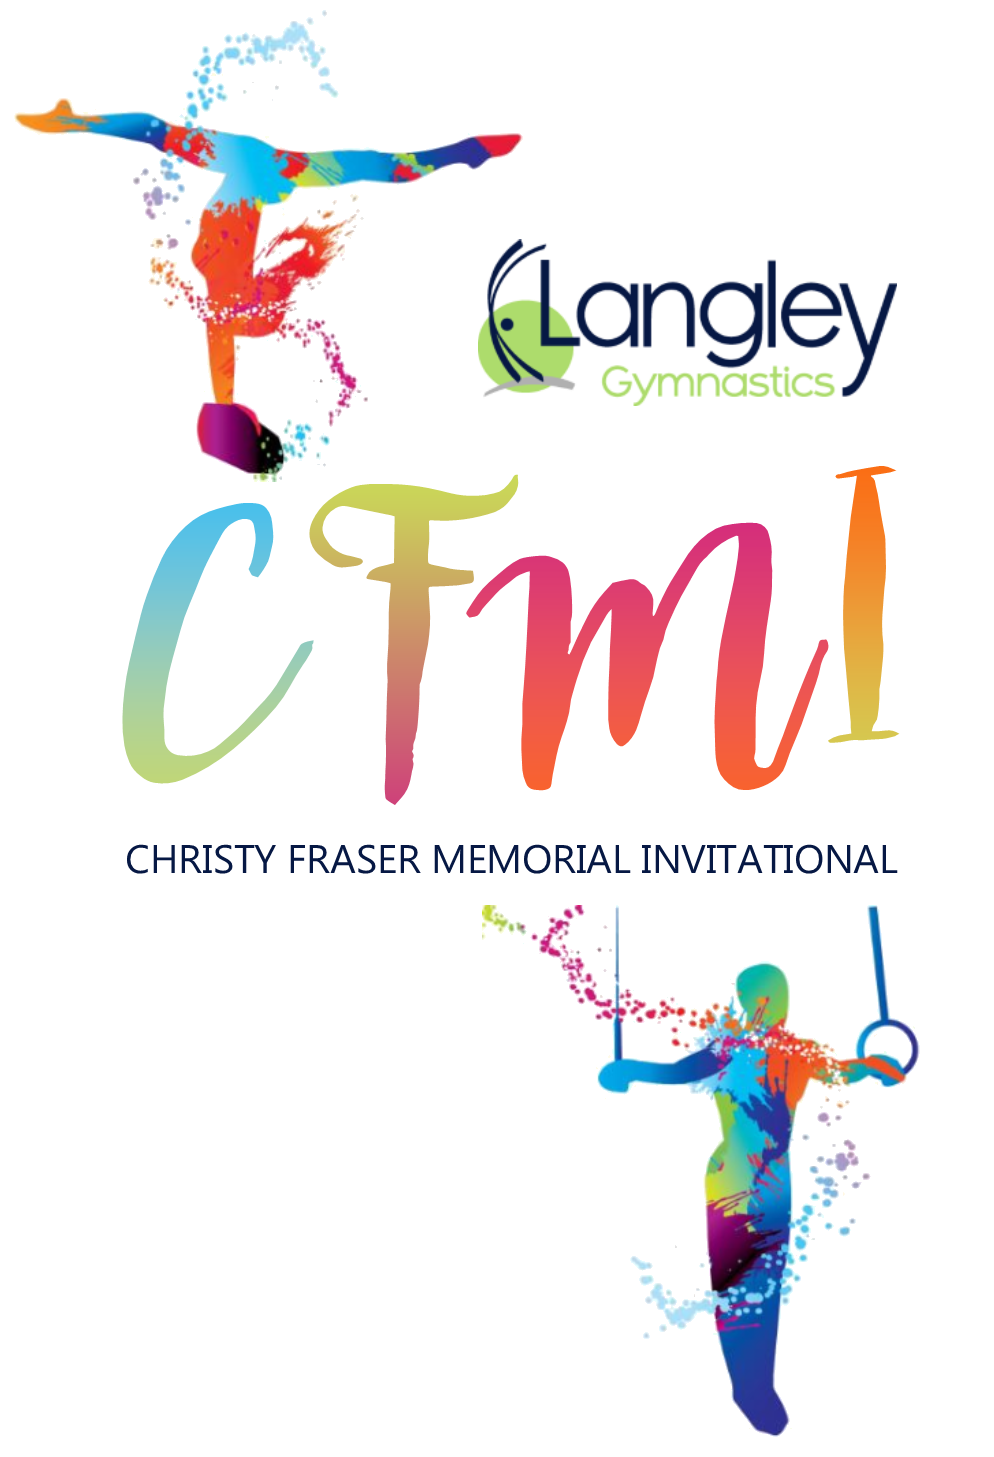 Christy Fraser Memorial Invitational 2021 Virtual Event logo